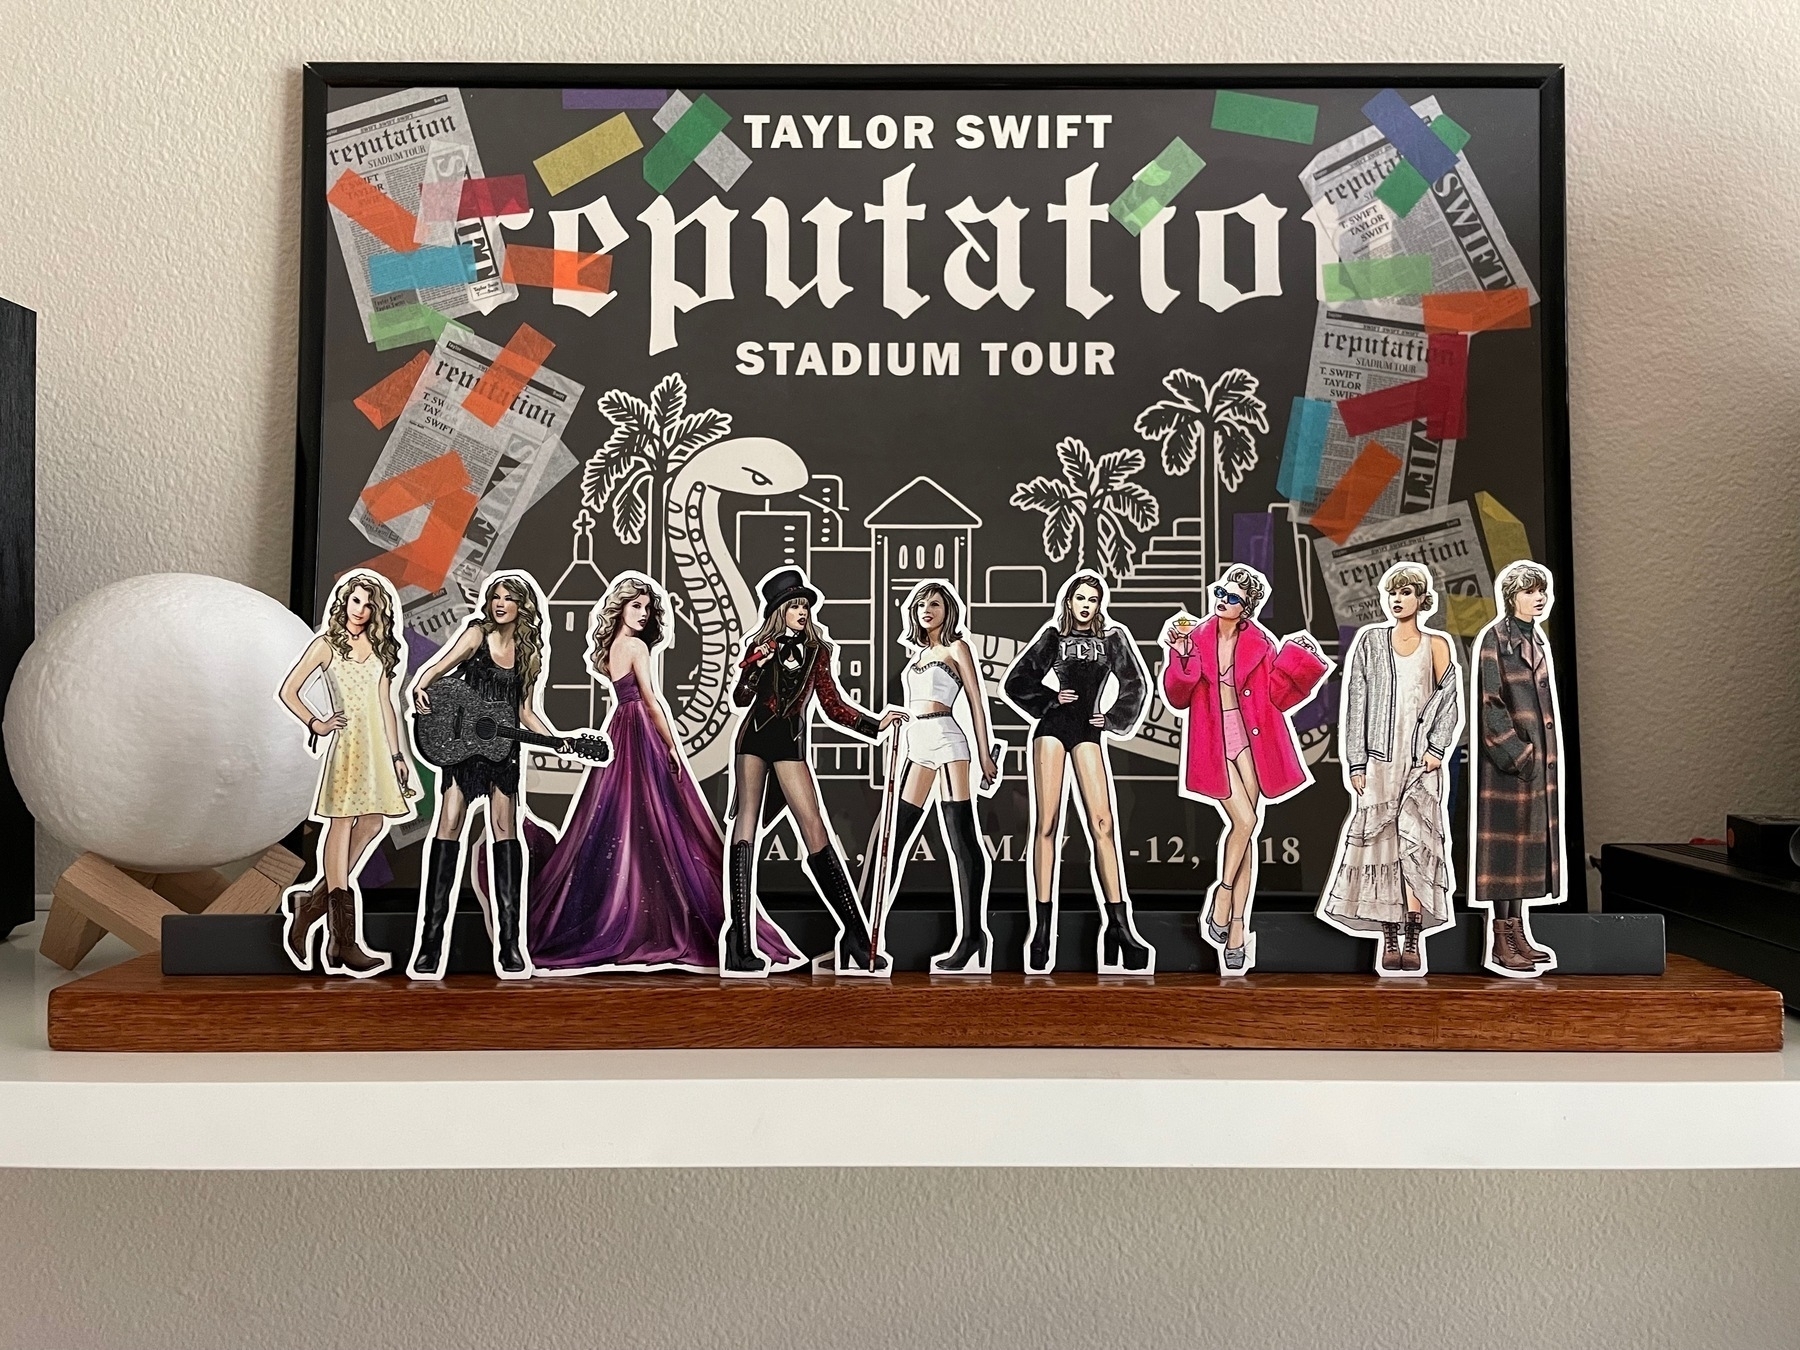 Taylor Swift era stickers on display